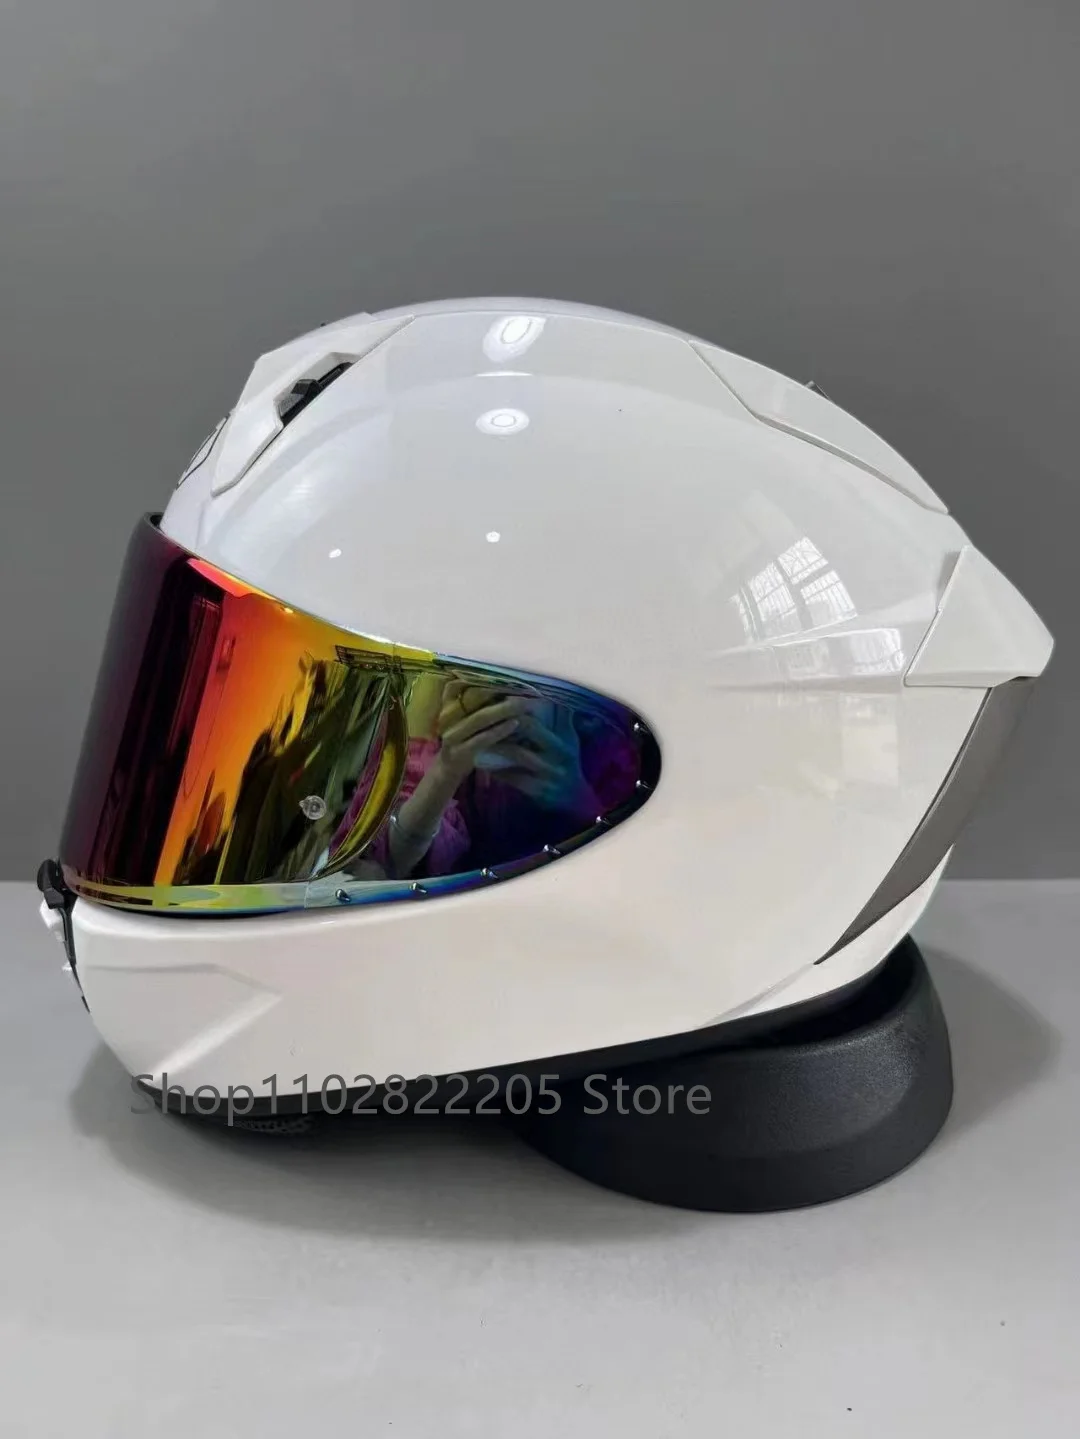 

Мотоциклетный шлем на все лицо X-SPR Pro X15, глянцевый белый шлем X-15, шлем для езды на мотоцикле, гоночный мотоциклетный шлем